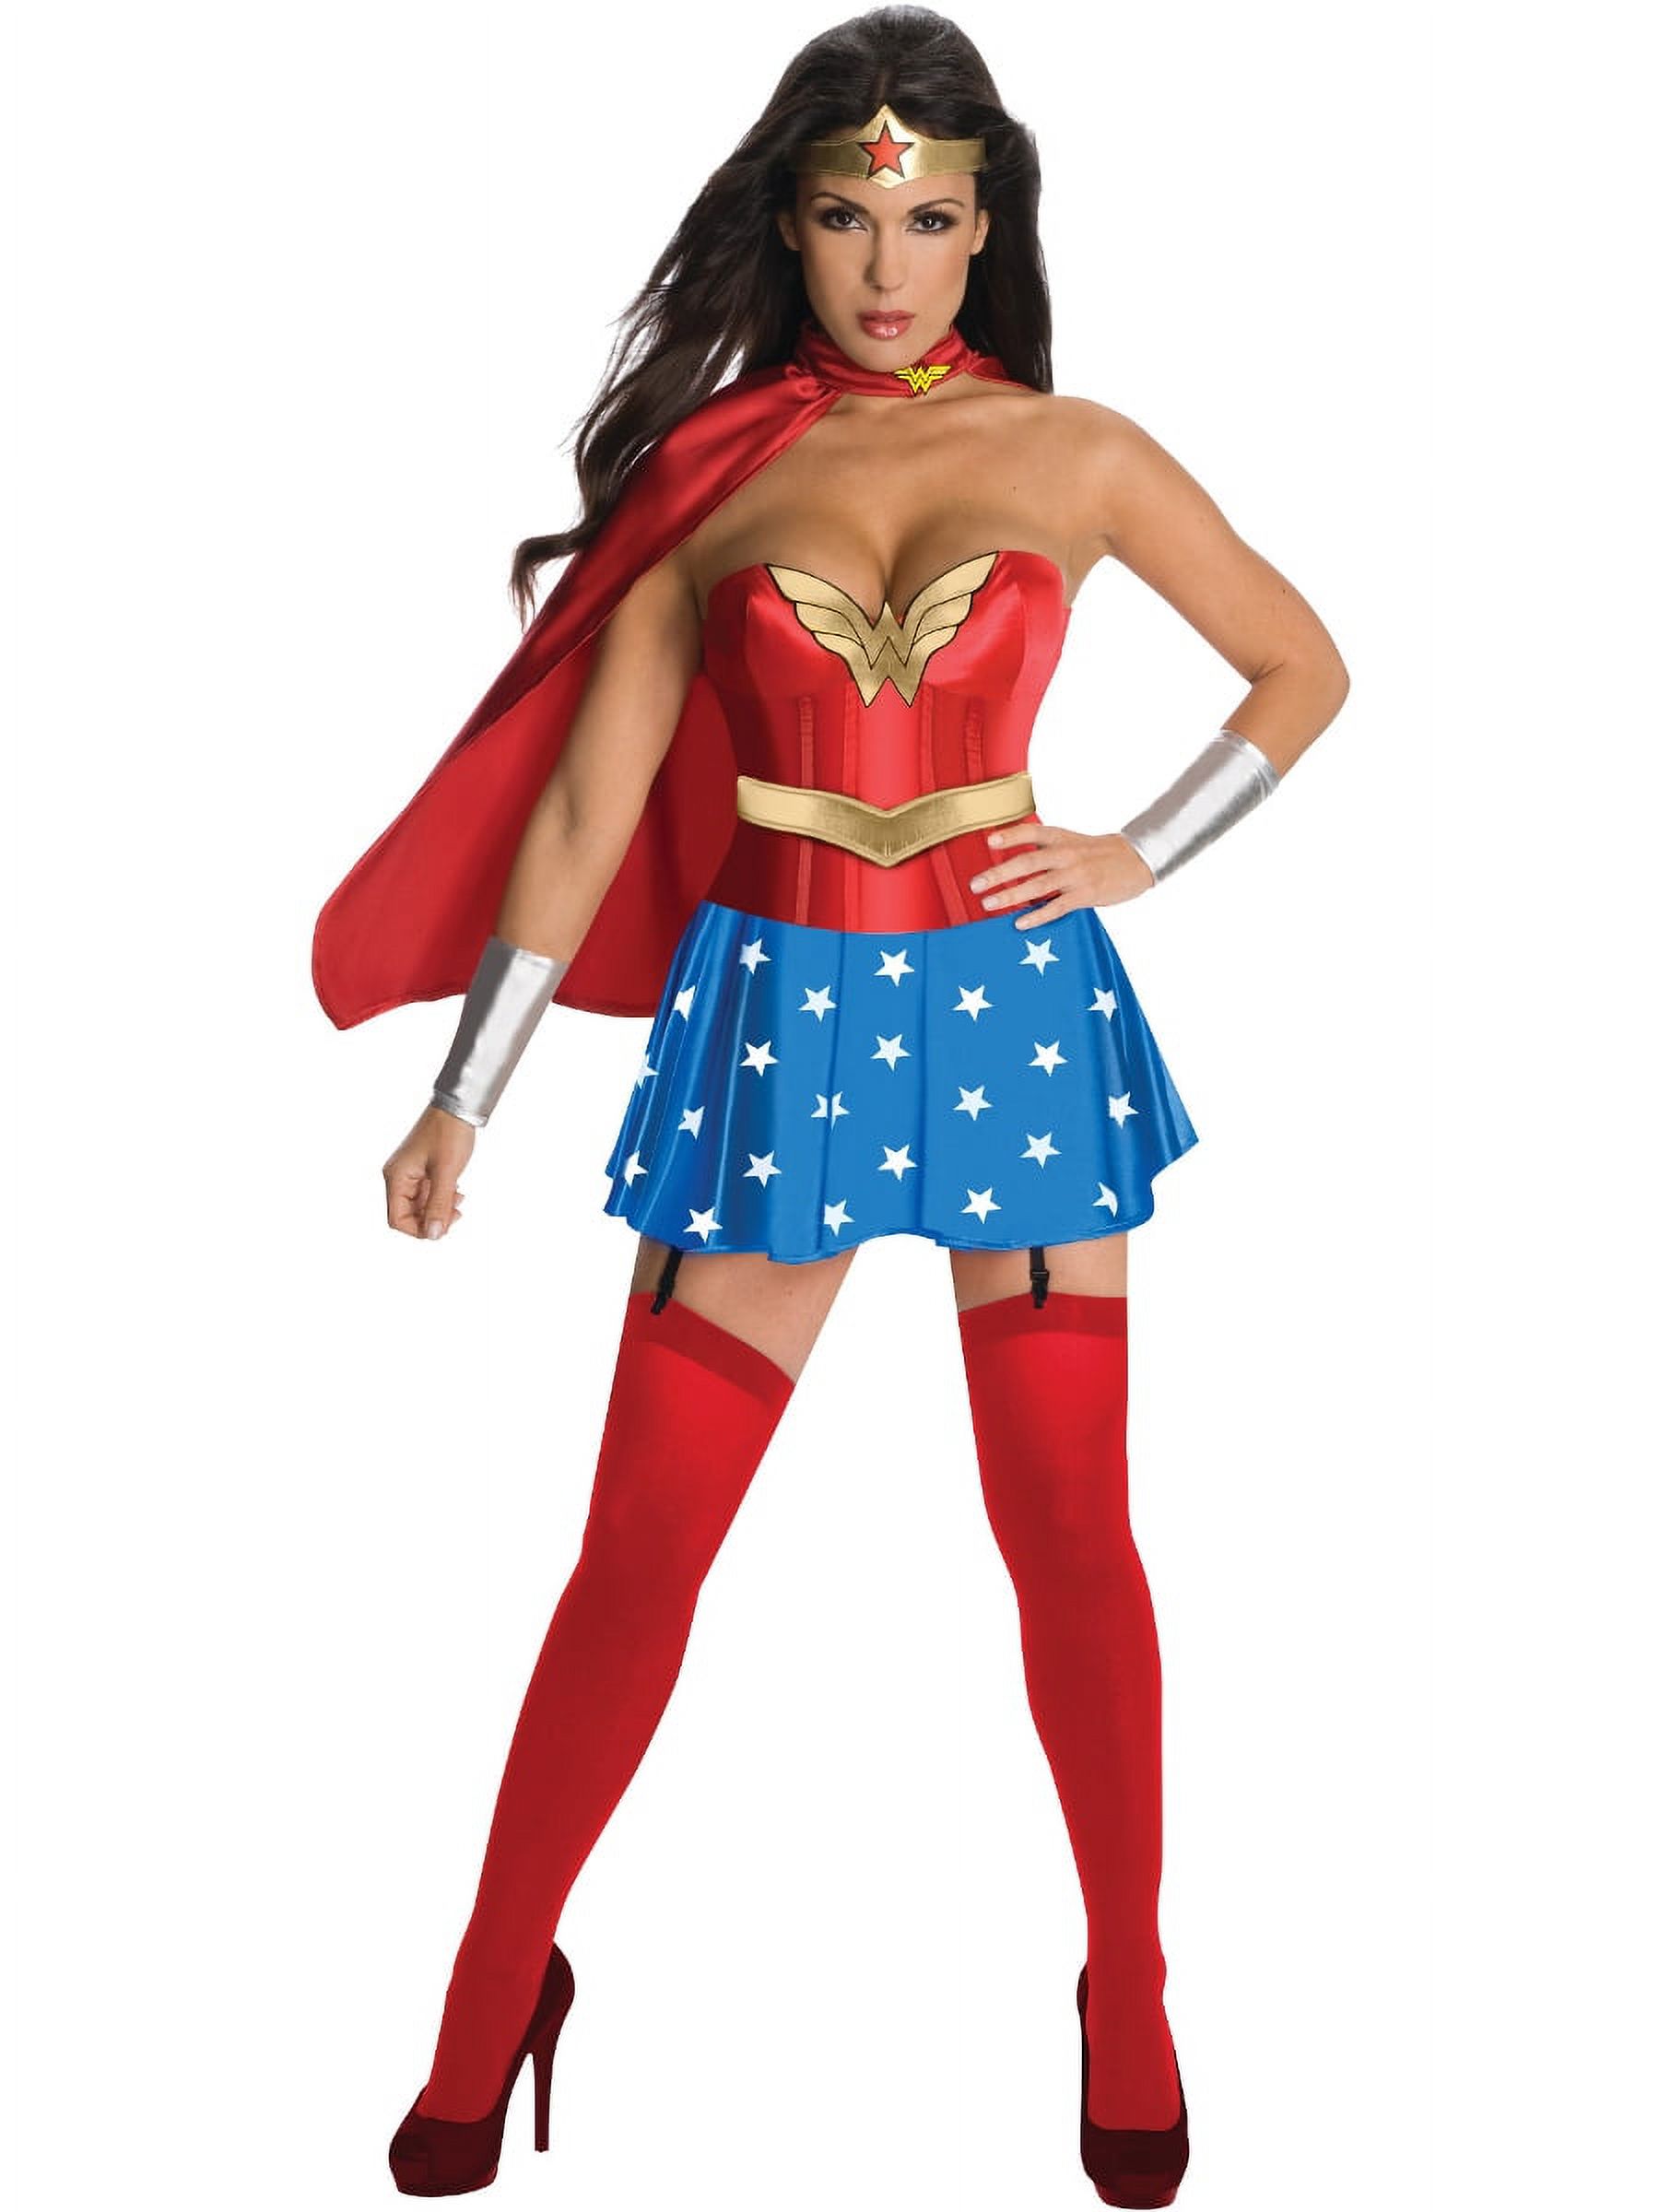 Sexy Wonder Woman Costume - image 2 of 2